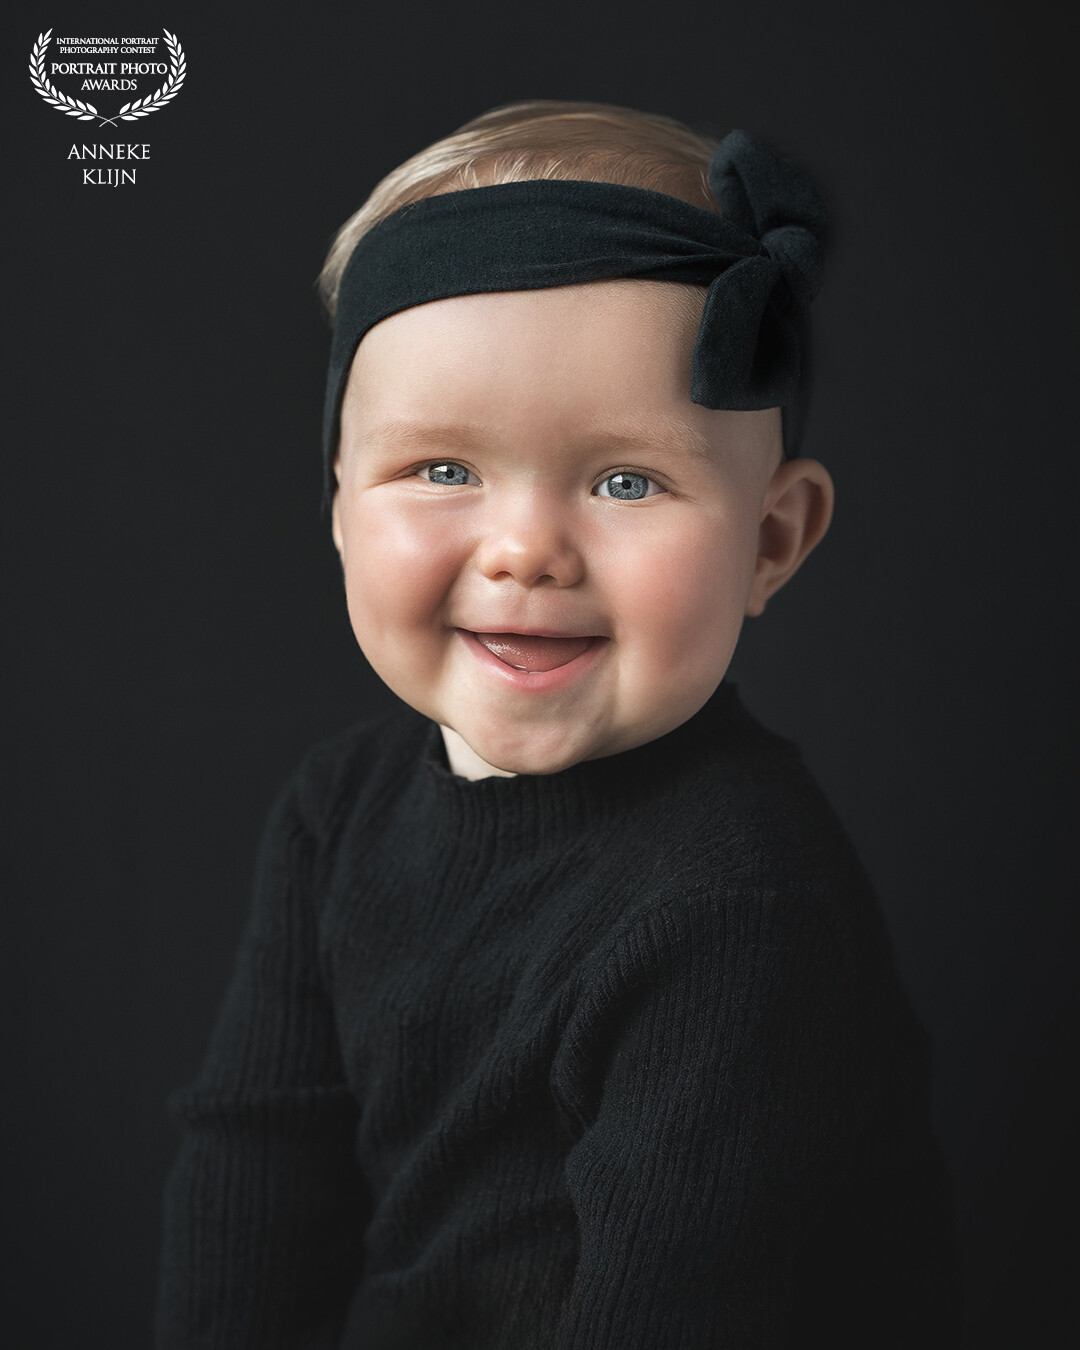 Model: Salomé, 9 months old <br />
<br />
Created and edit by: @anneke_klijn_fotografie<br />
www.annekeklijnfotografie.nl